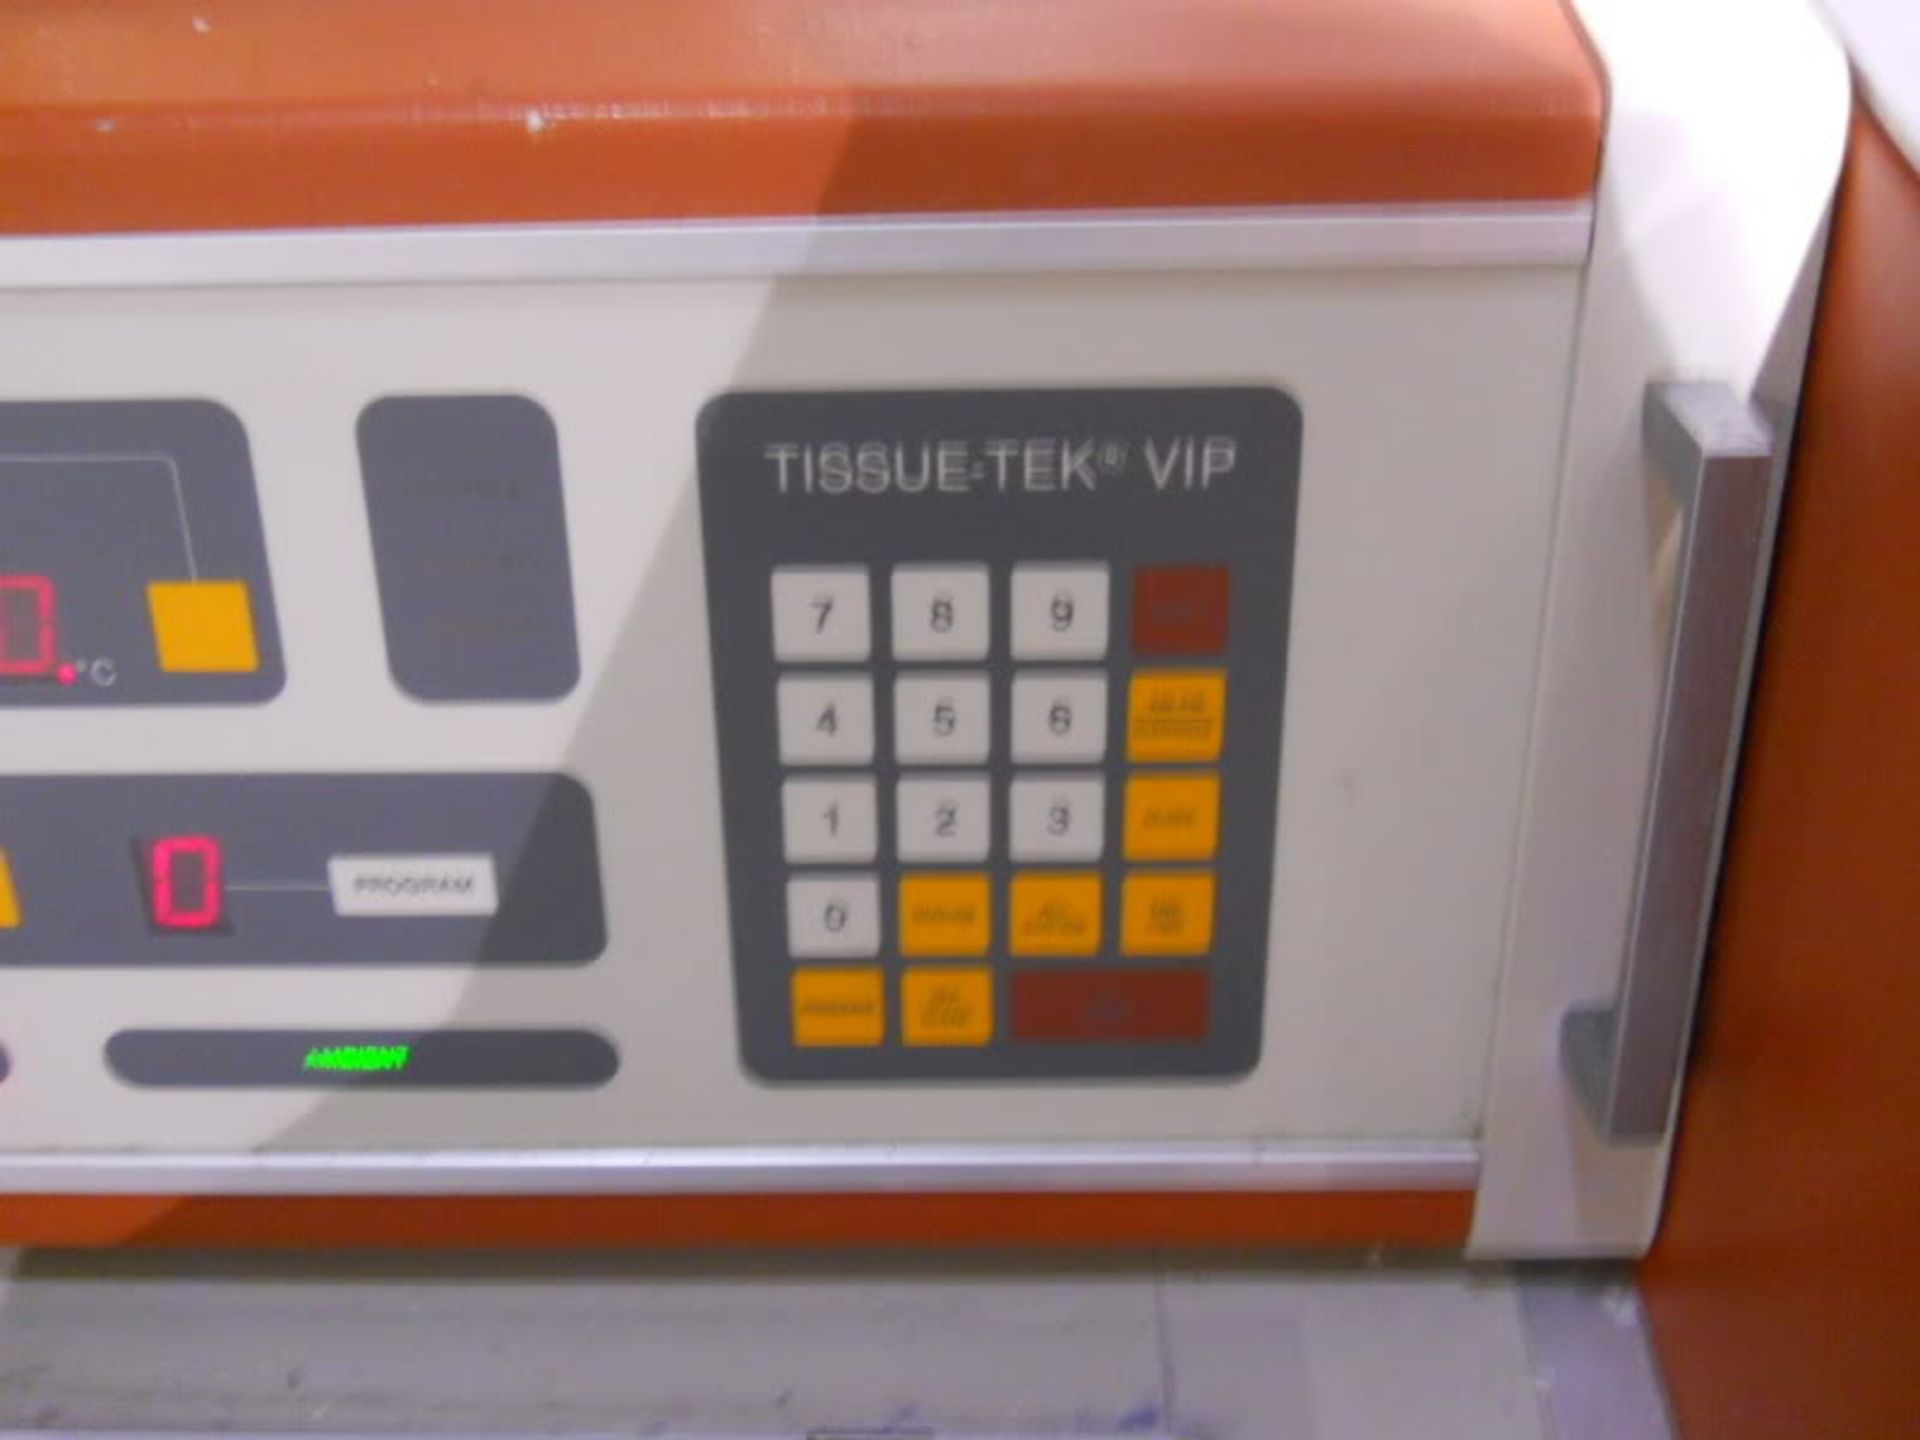 Miles Scientific Tissue Tek VIP 3000 Tissue Processor Model 4619 (Parts), Qty 1, 321032048792 - Image 5 of 23